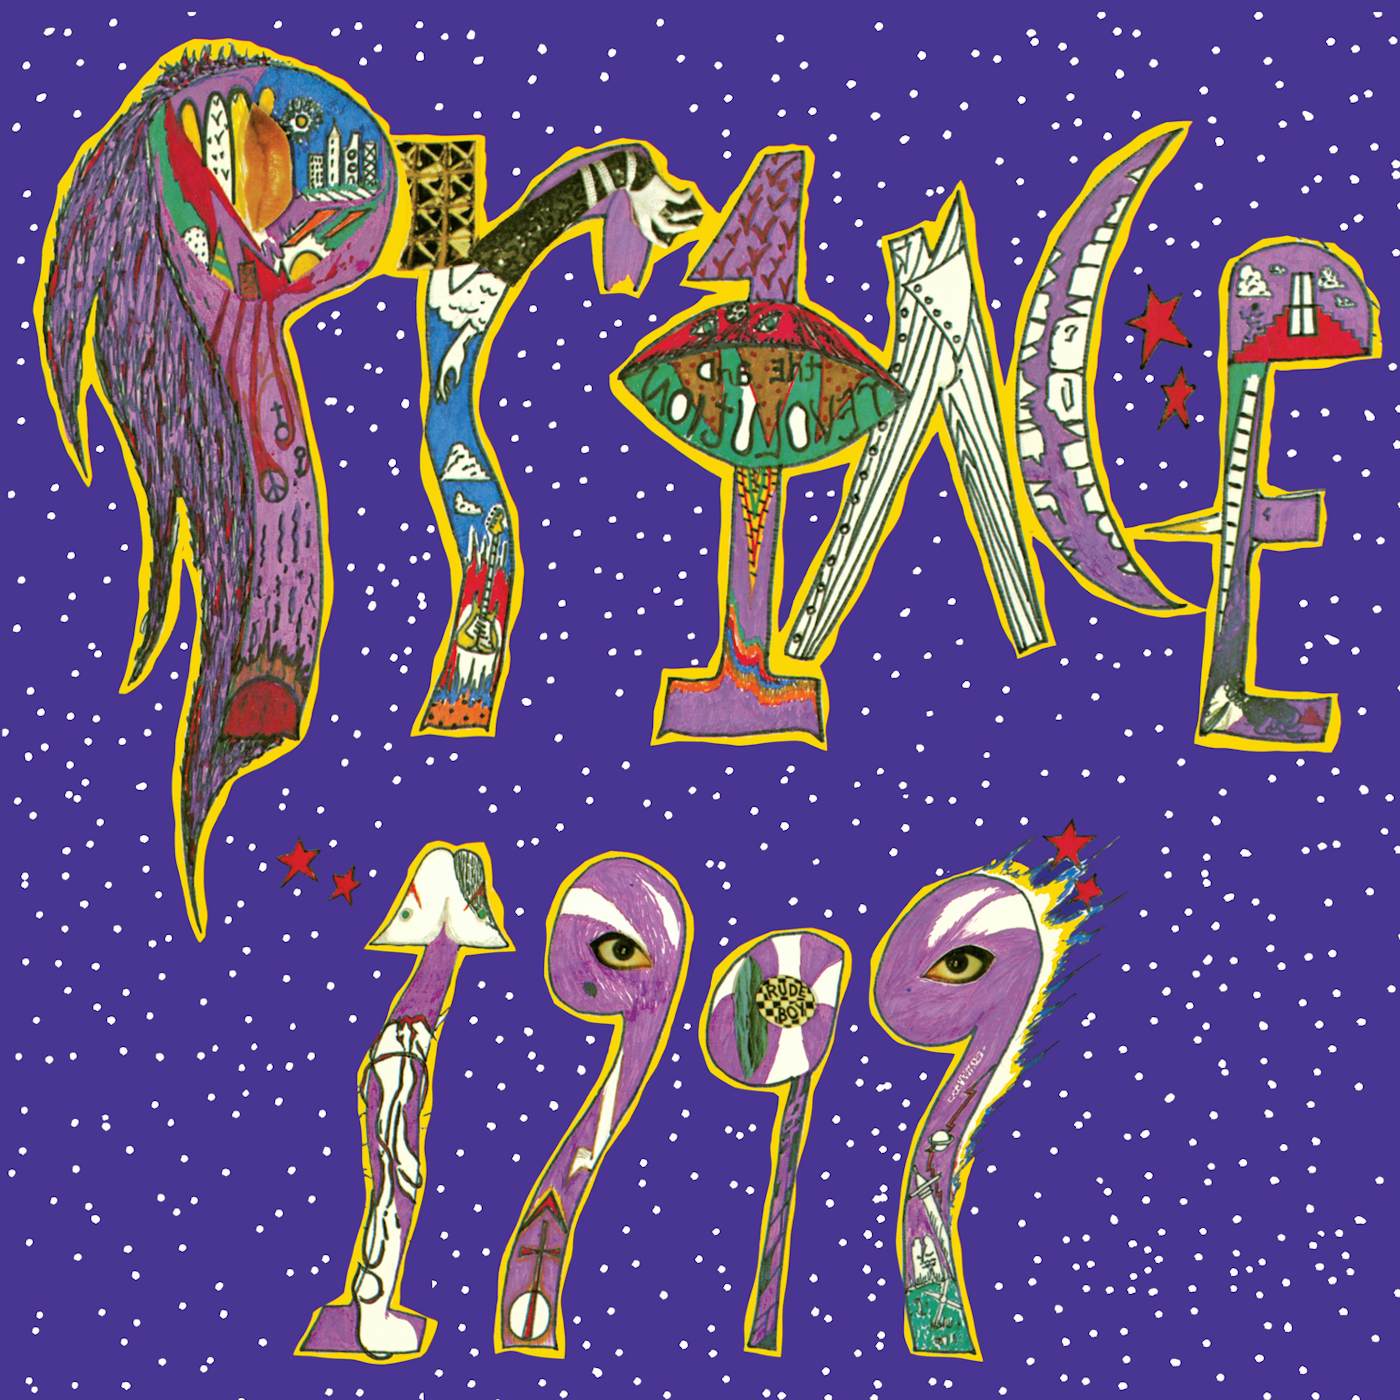 Prince 1999 (X) Vinyl Record